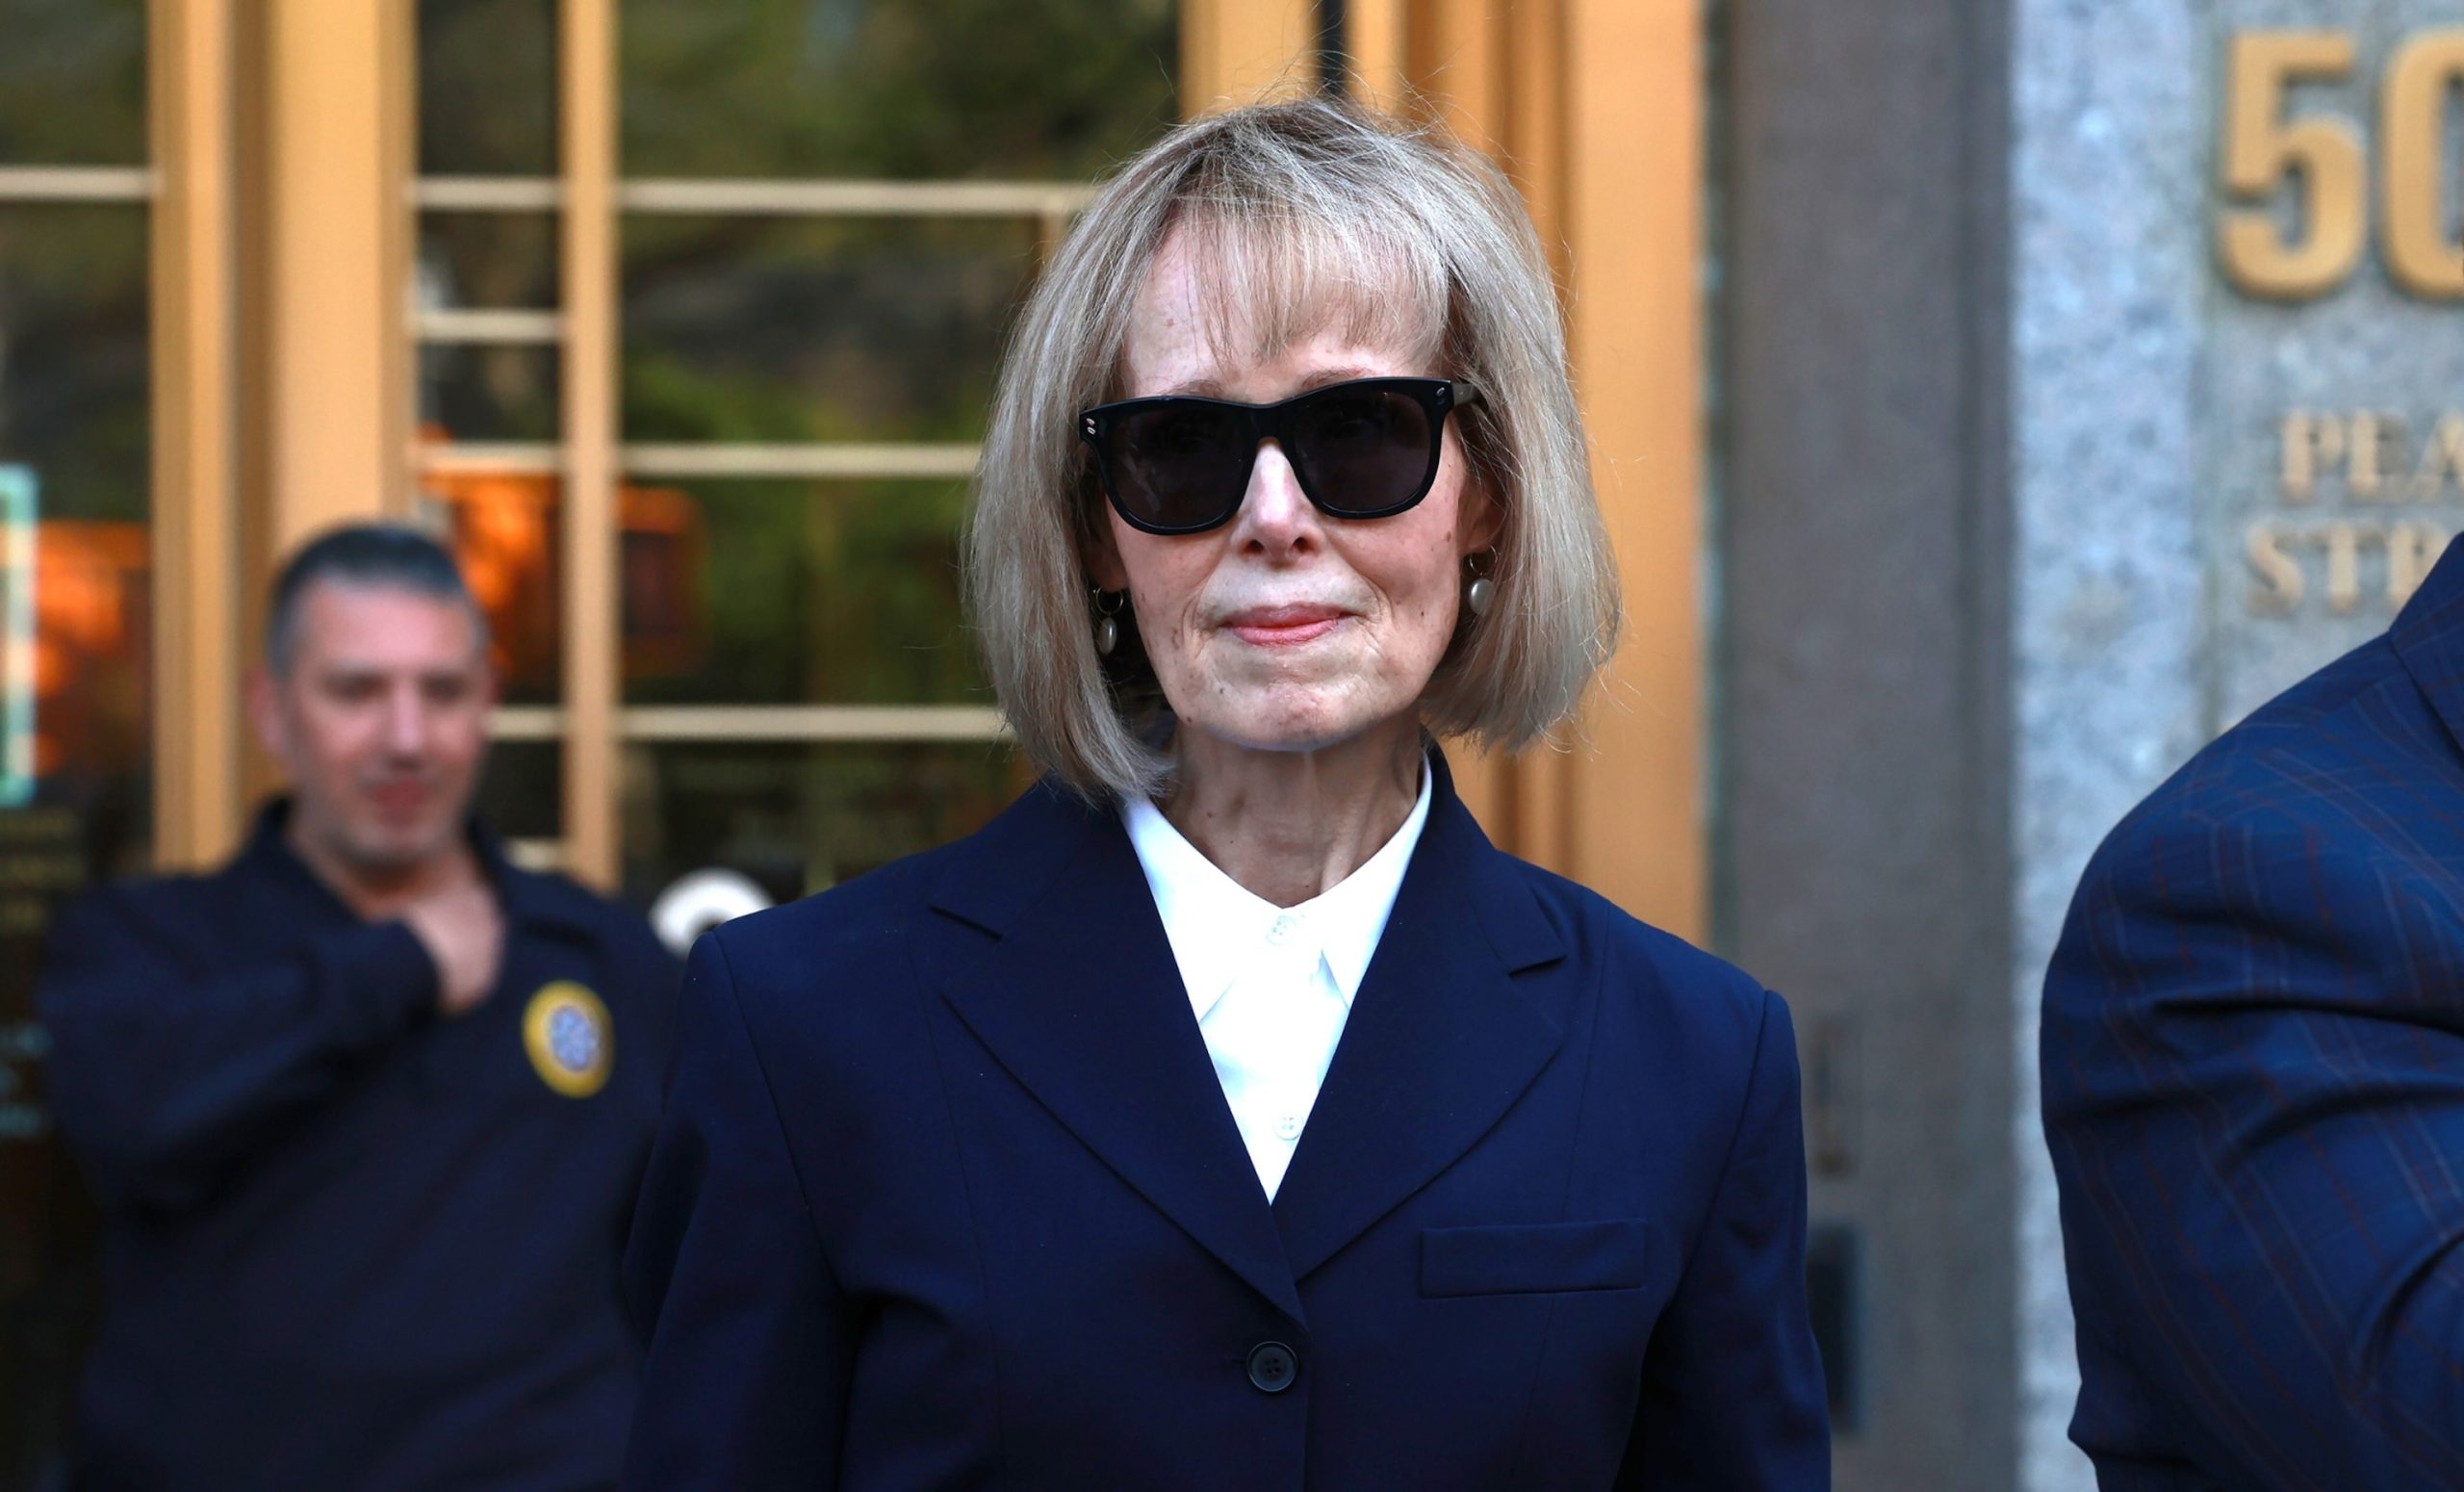 Judge Grants Approval for $91.6 Million Bond in E. Jean Carroll Defamation Case Involving Trump